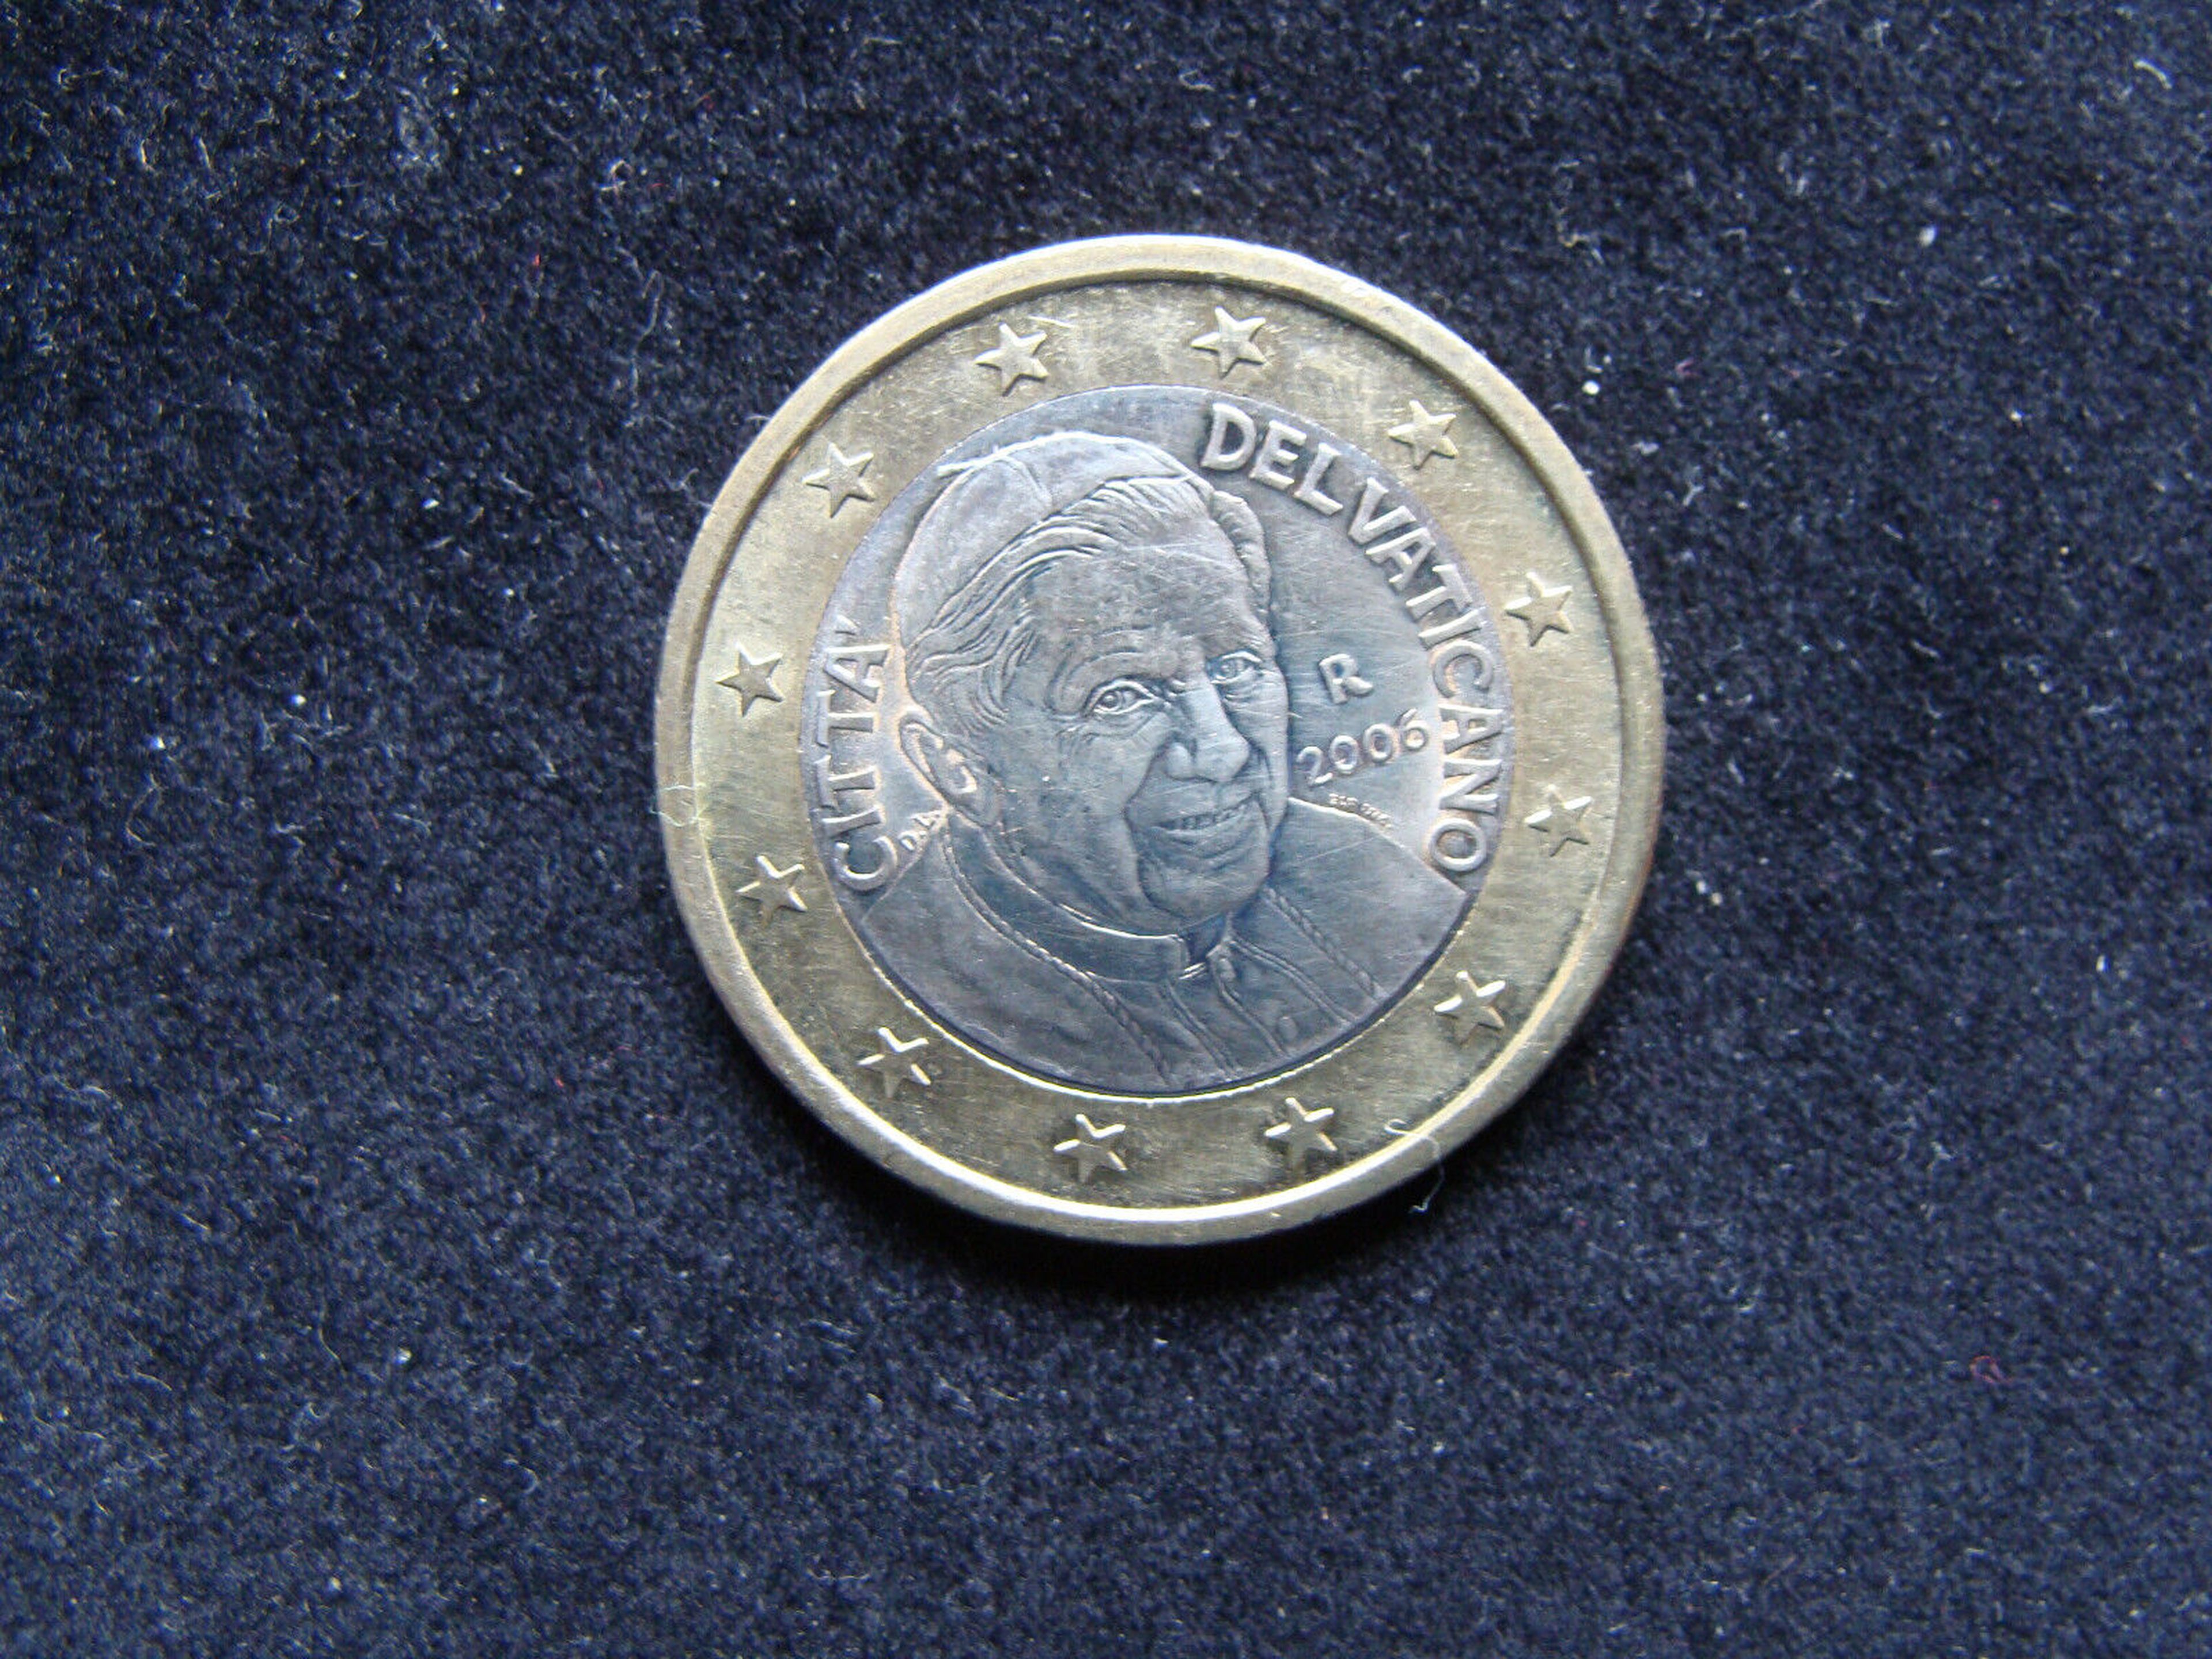 1 euro del Vaticano 2006